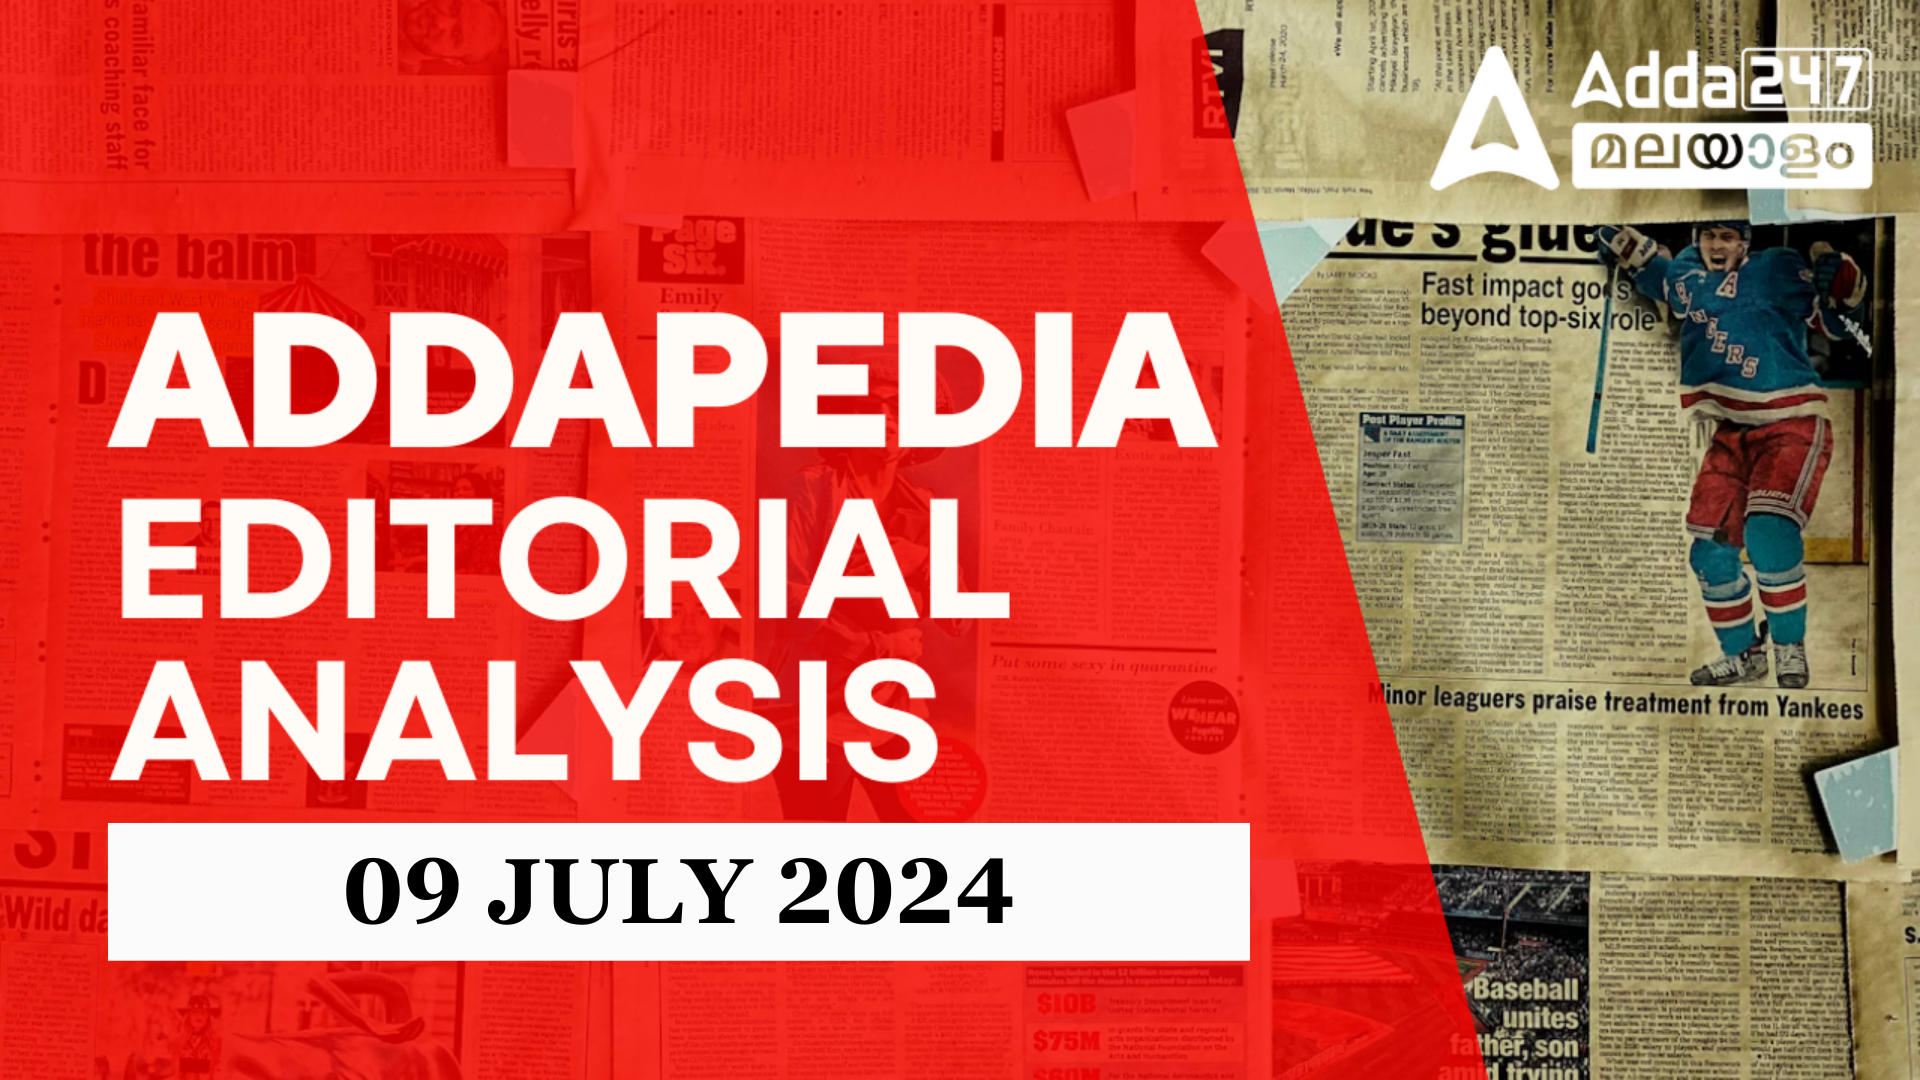 Addapedia Editorial Analysis: Daily News Editorial PDF, 09 July 2024| അഡാപീഡിയ എഡിറ്റോറിയൽ അനാലിസിസ് PDF